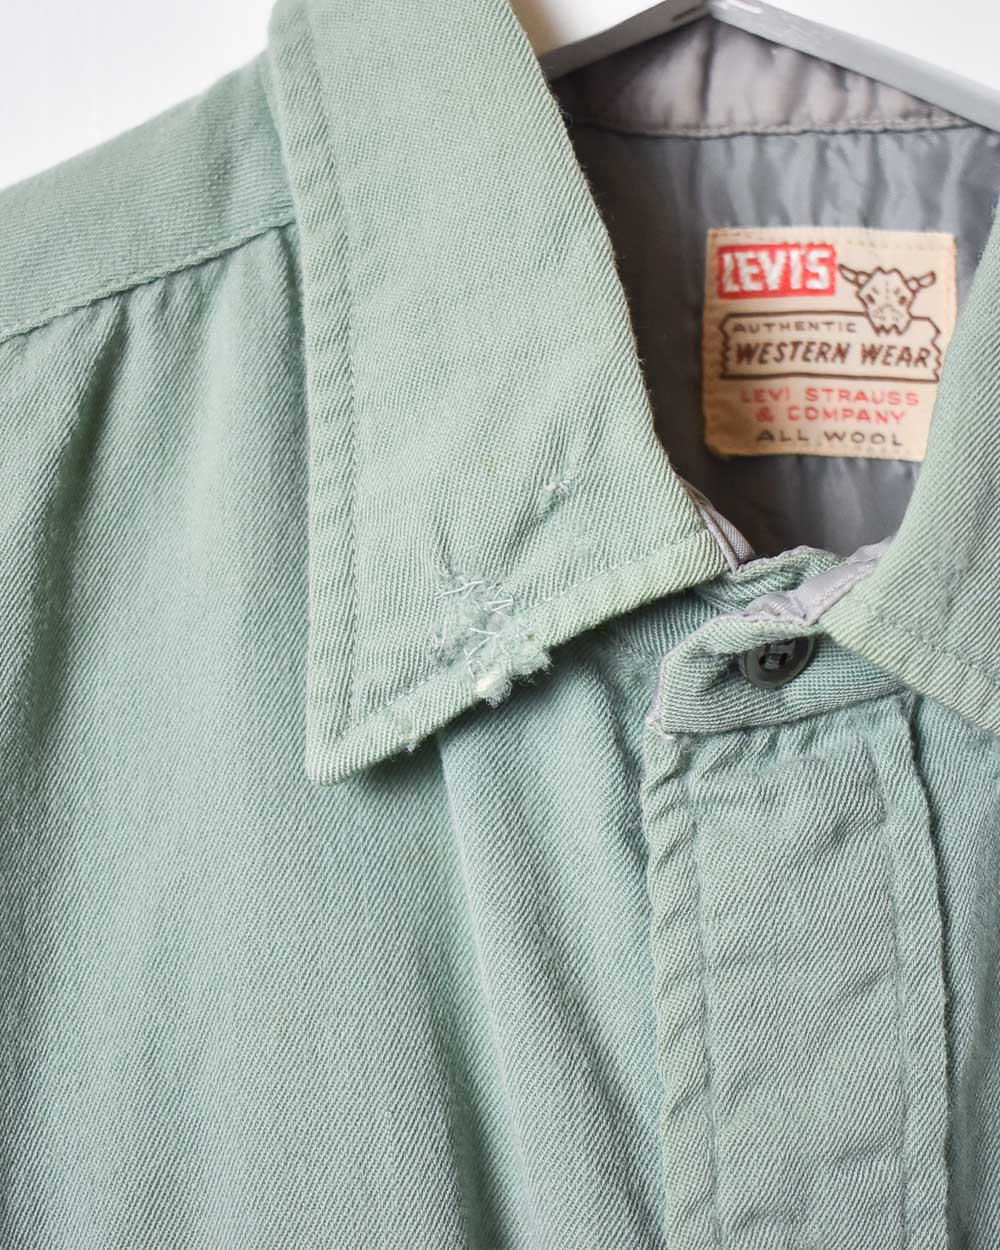 Green Levi's Wool Shirt - Small